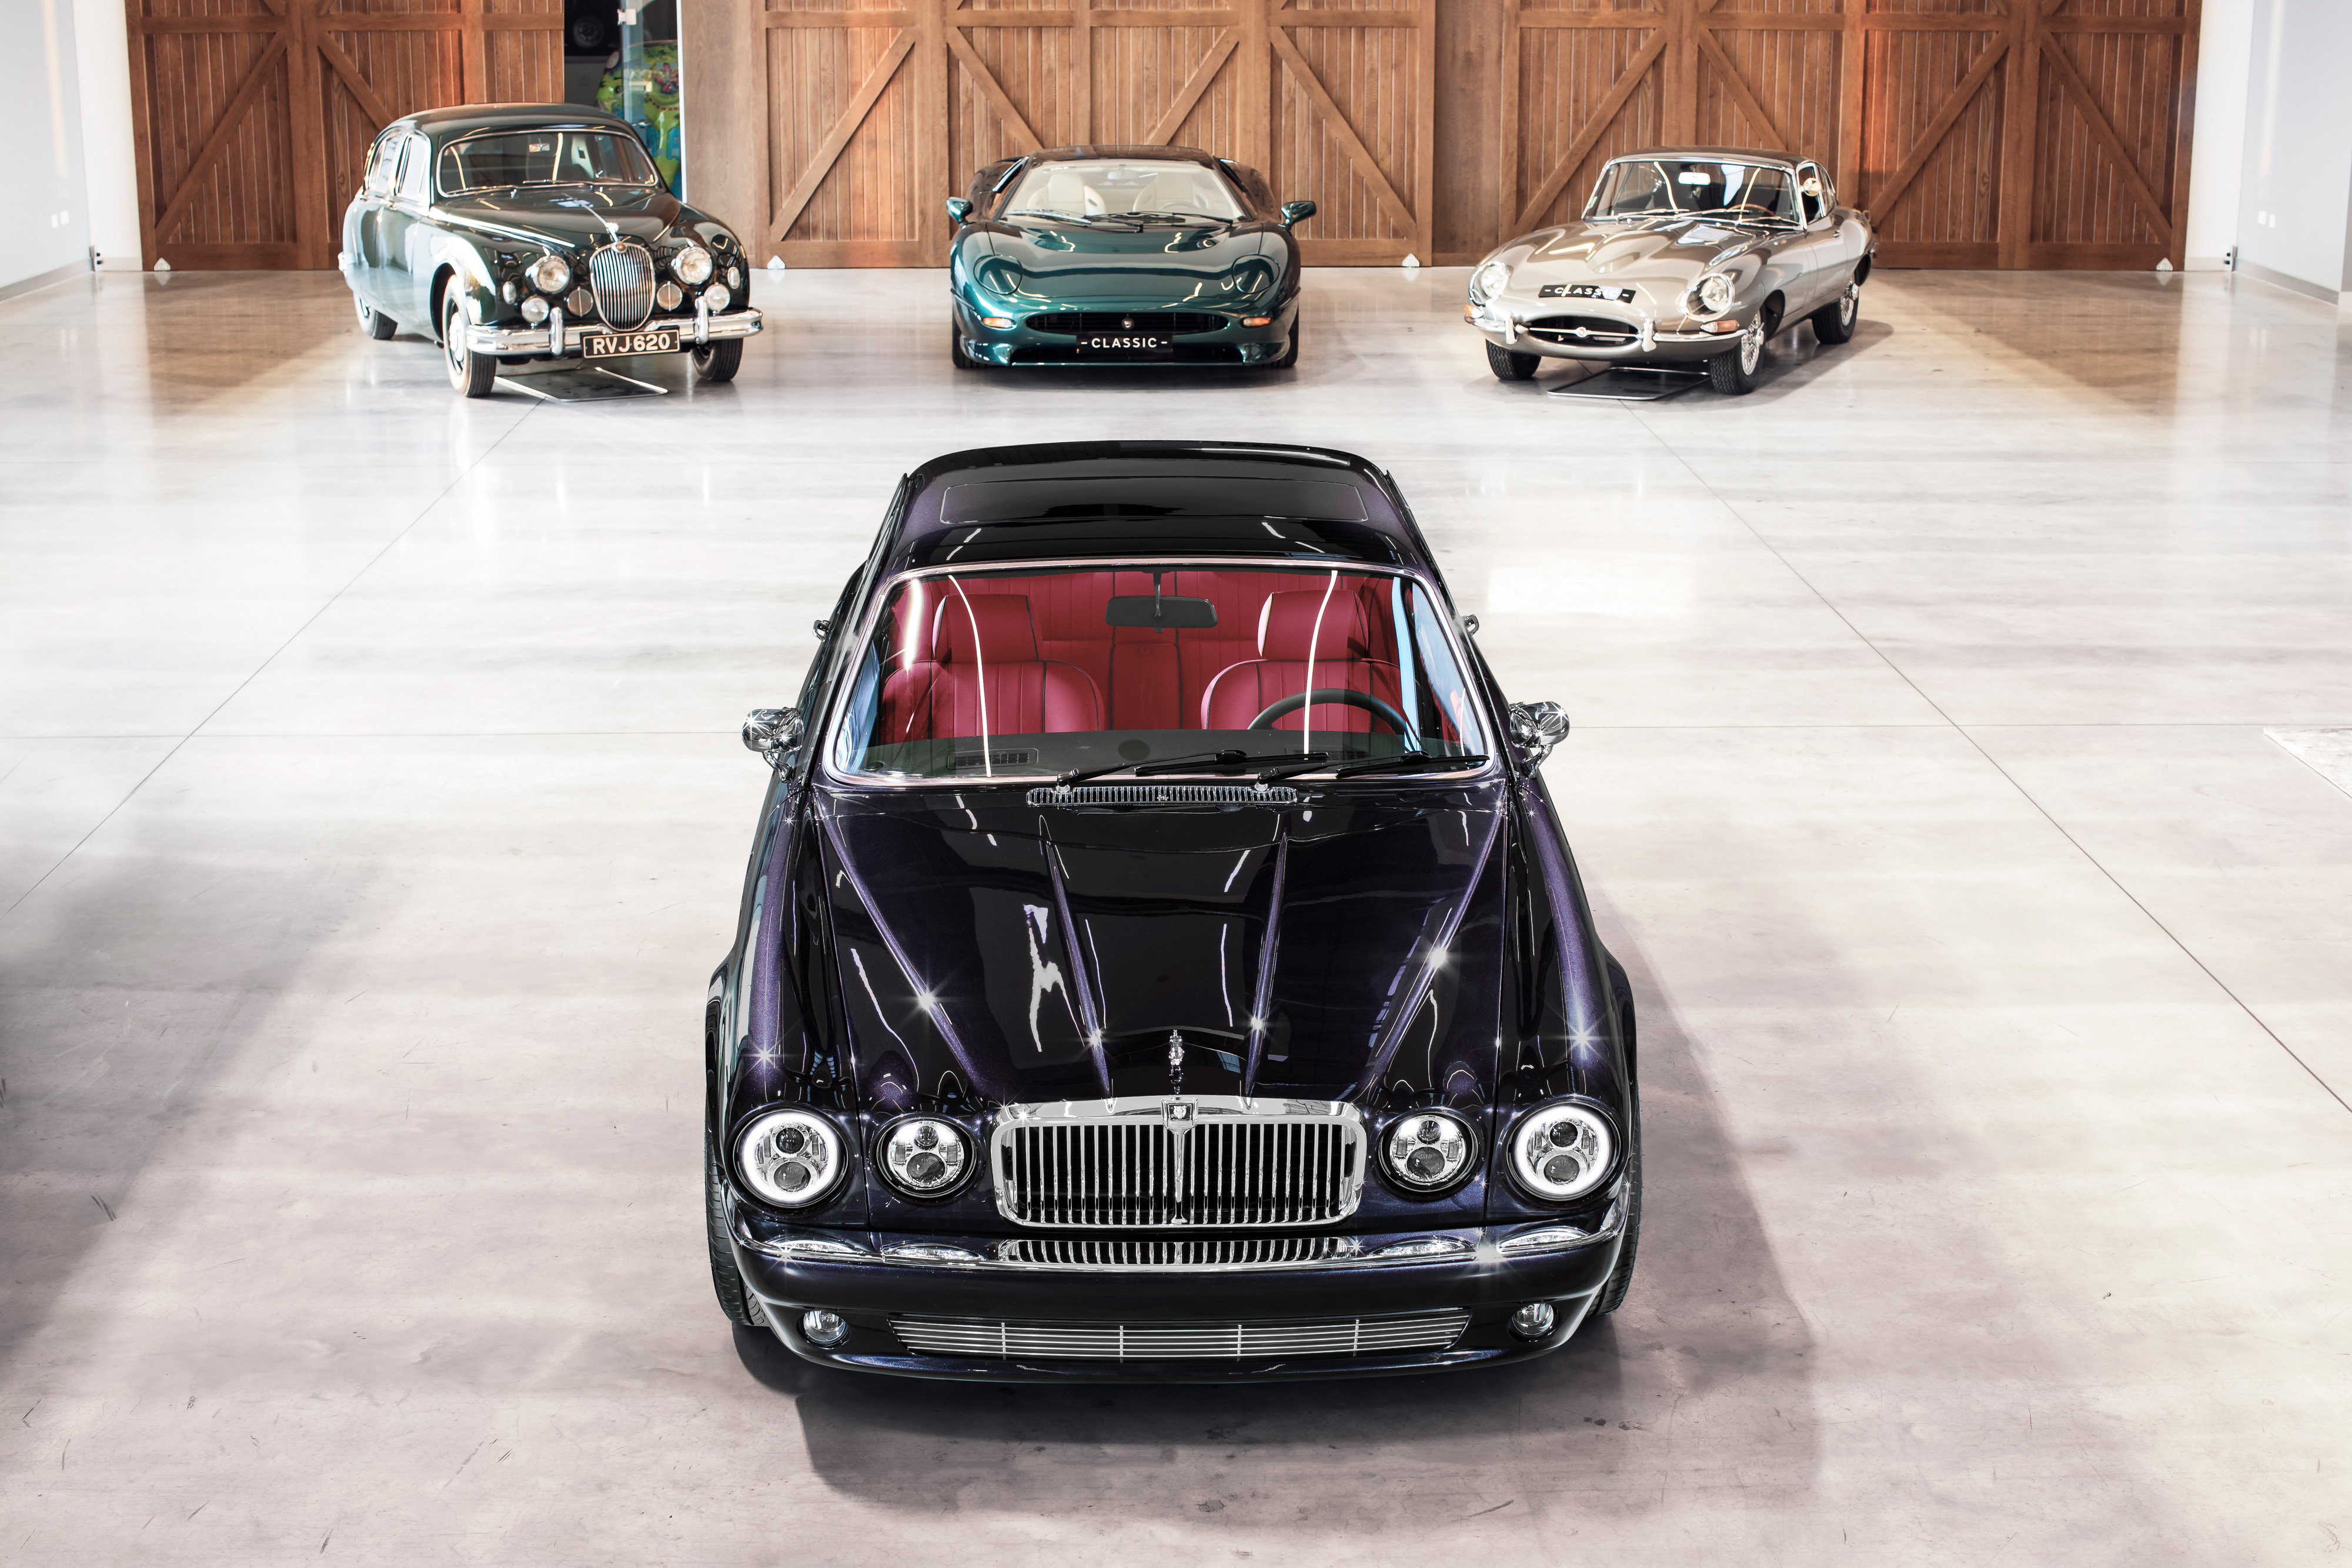 Jaguar Xj6 Wallpapers